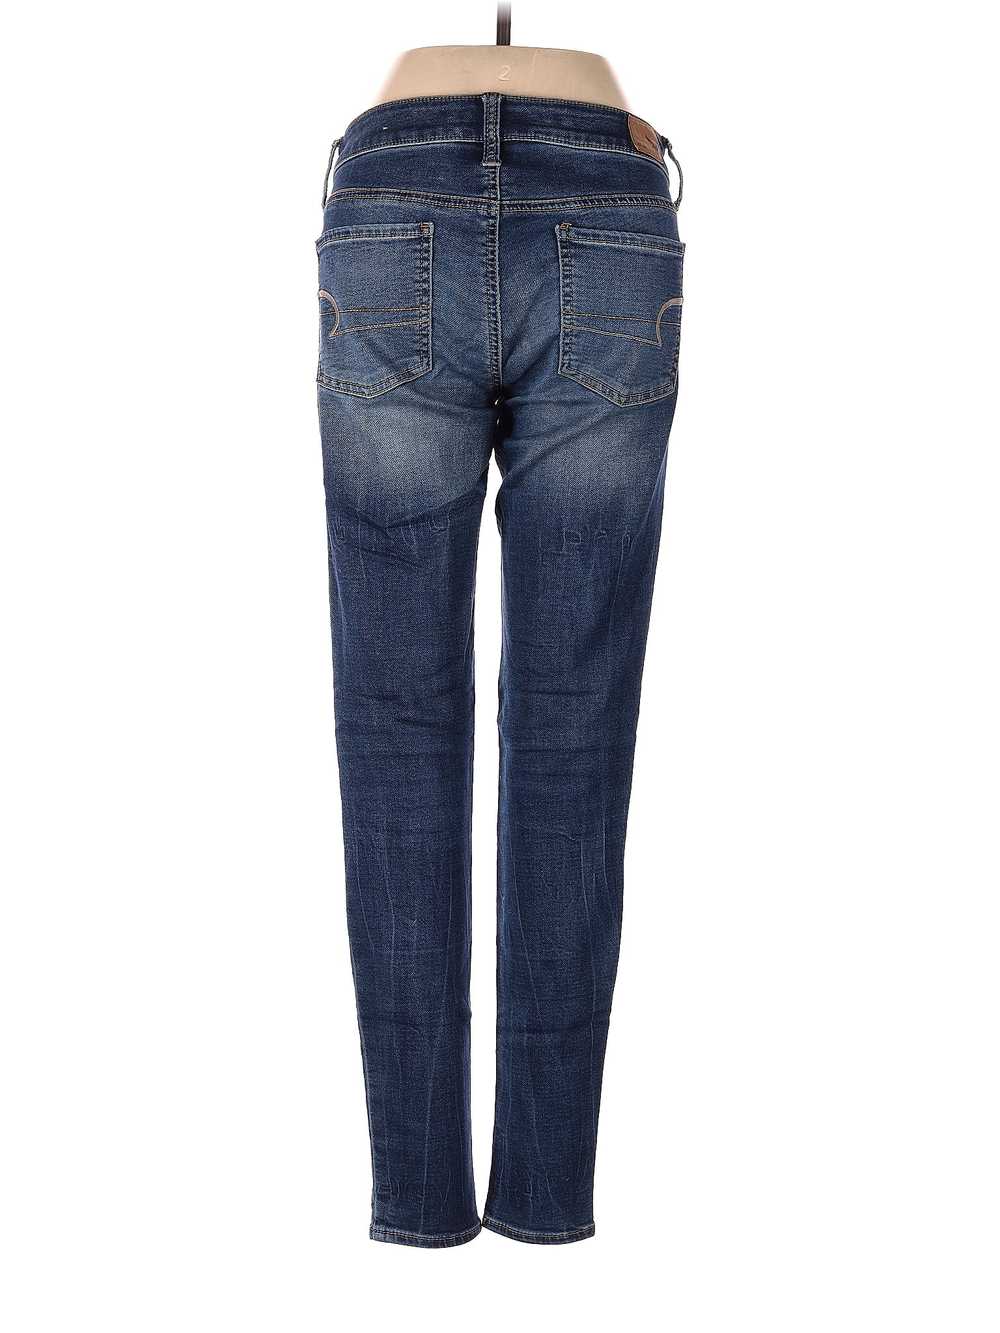 Wrangler Jeans Co Women Blue Jeans 3 - image 2